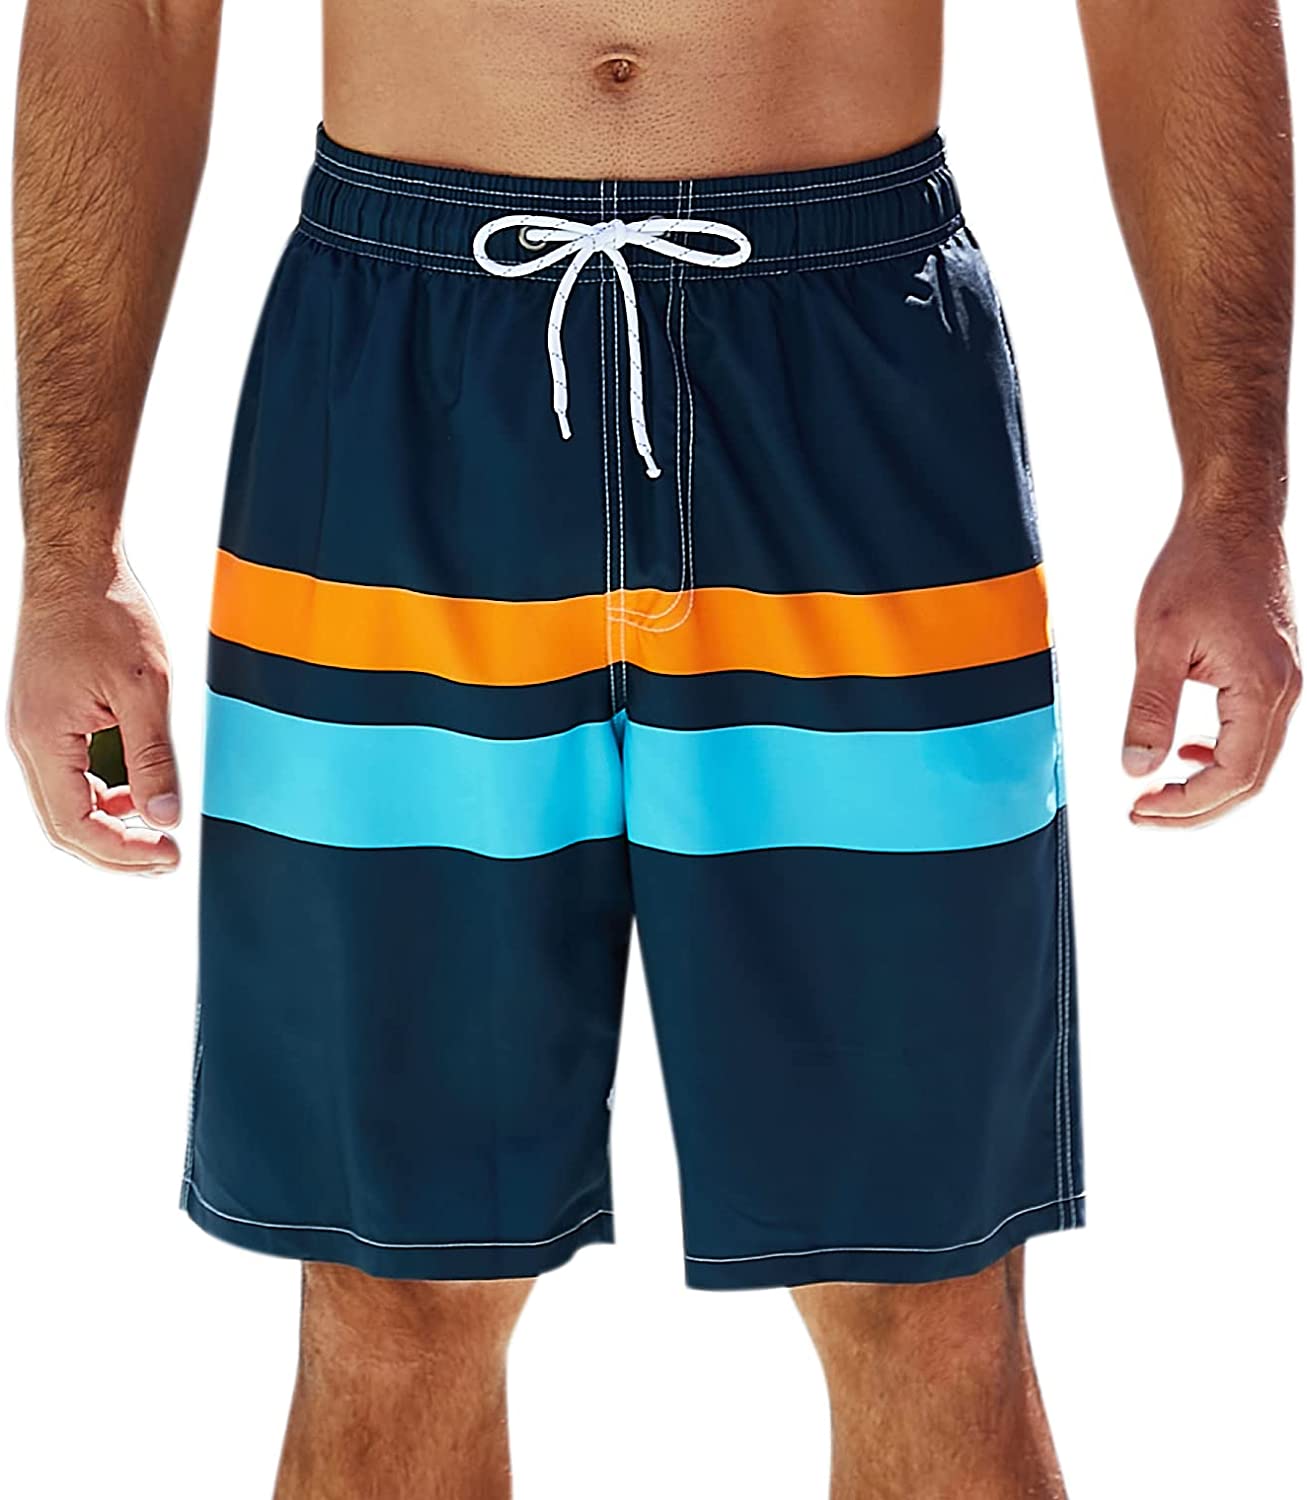 SILKWORLD Mens Swimming Shorts Quick Dry Beach Trunks Swimwear with Mesh Lining 